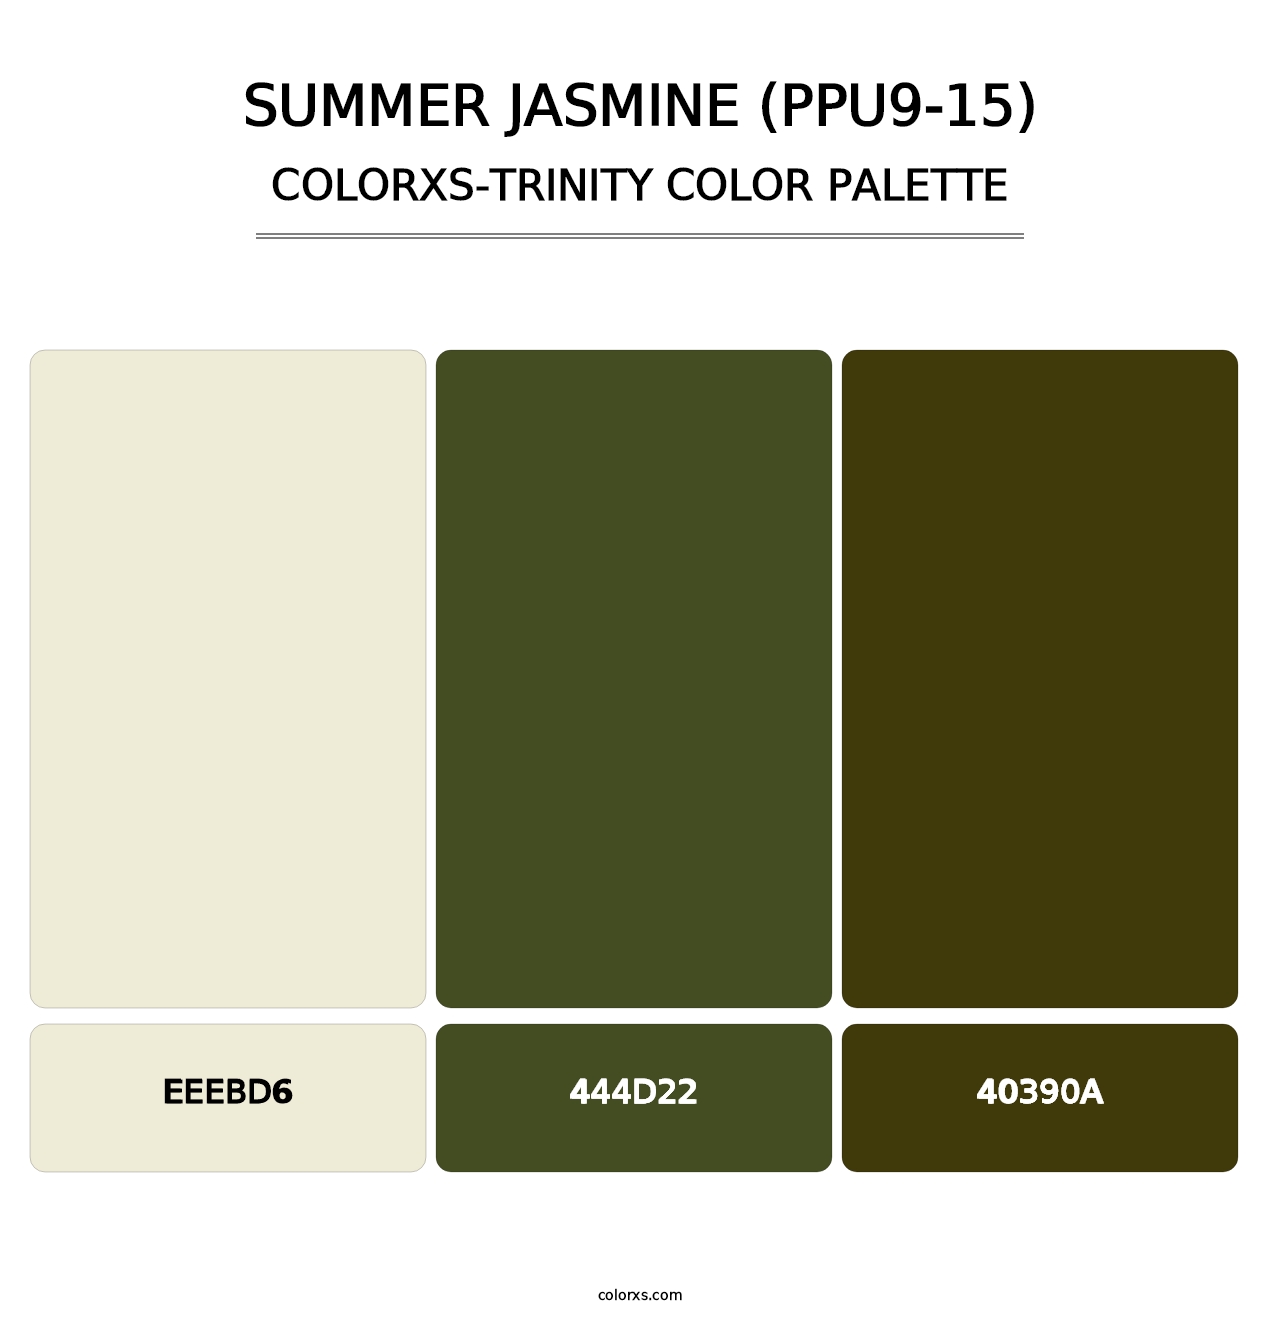 Summer Jasmine (PPU9-15) - Colorxs Trinity Palette